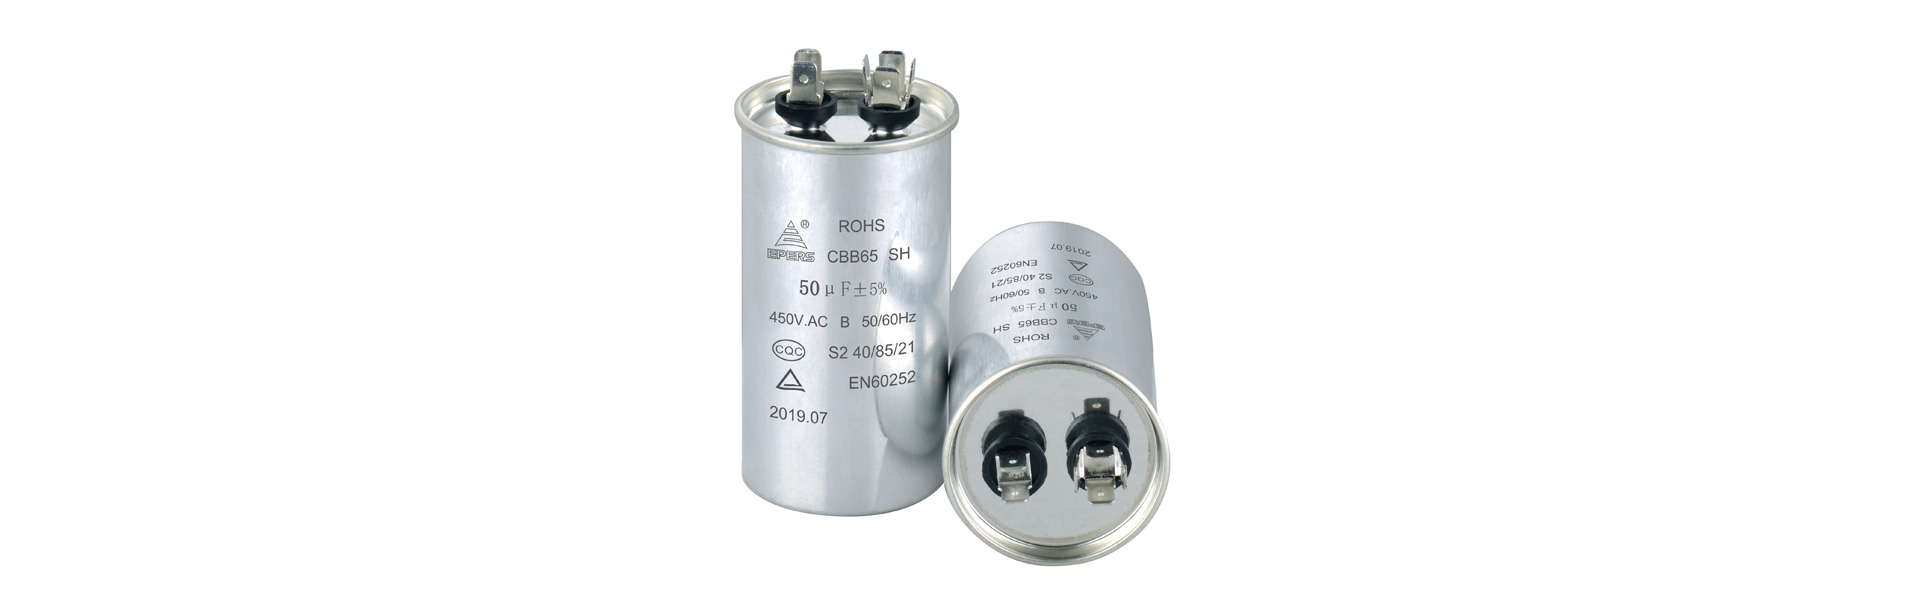 kondenzátor mag, metallizált film,cbb61,Zhongshan Epers Electrical Appliances Co.,Ltd.